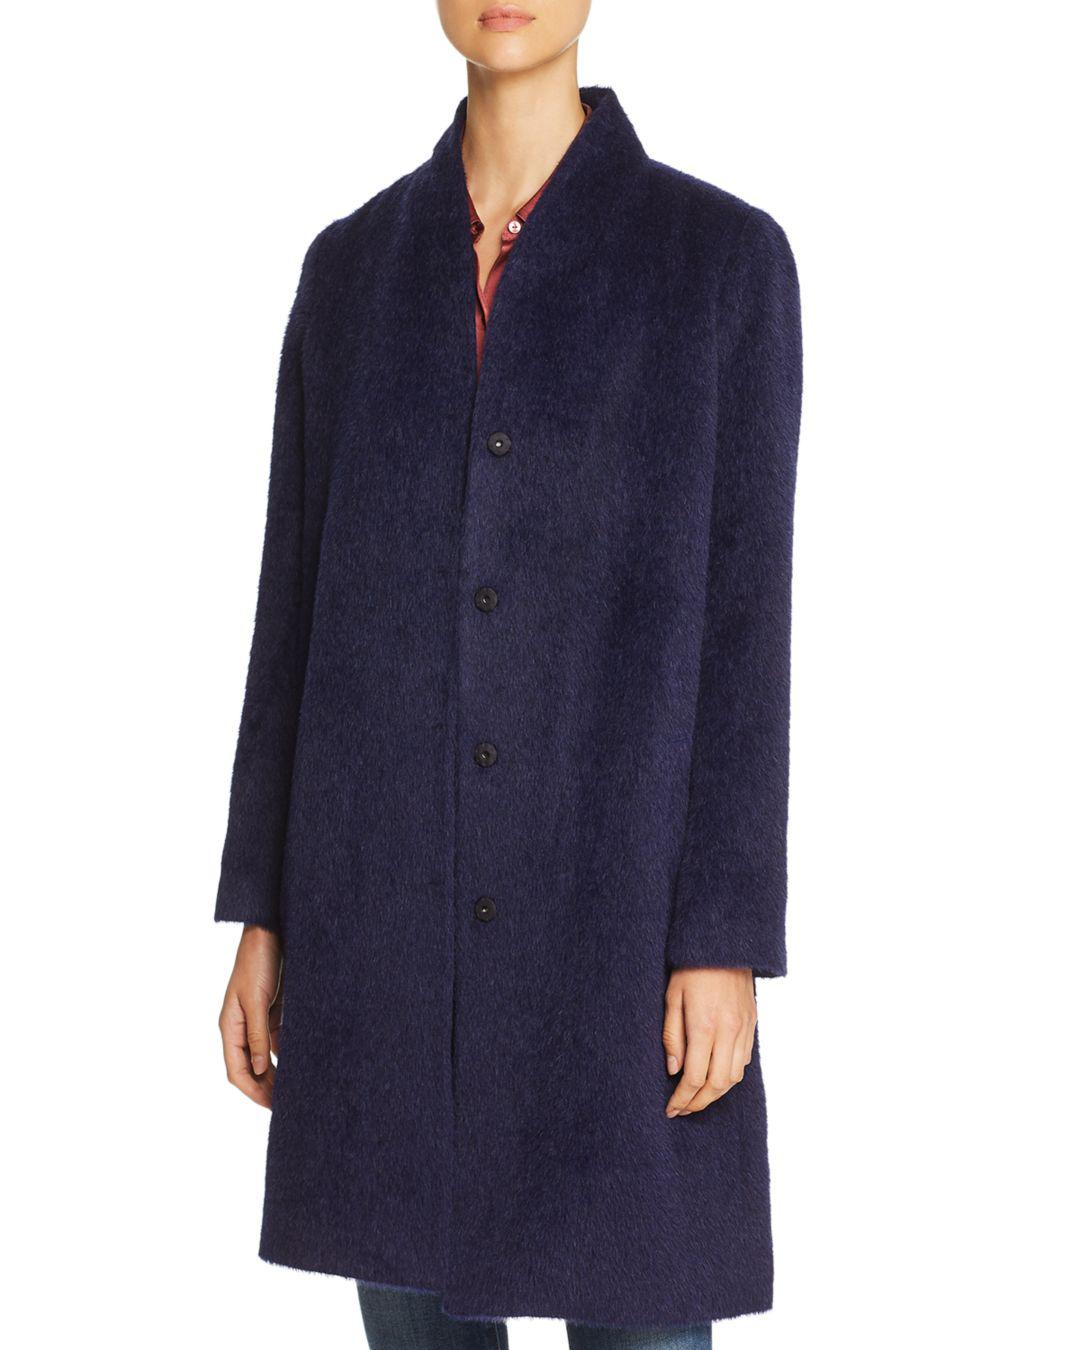 Eileen Fisher Stand Collar Textured Coat in Midnight (Blue) - Lyst